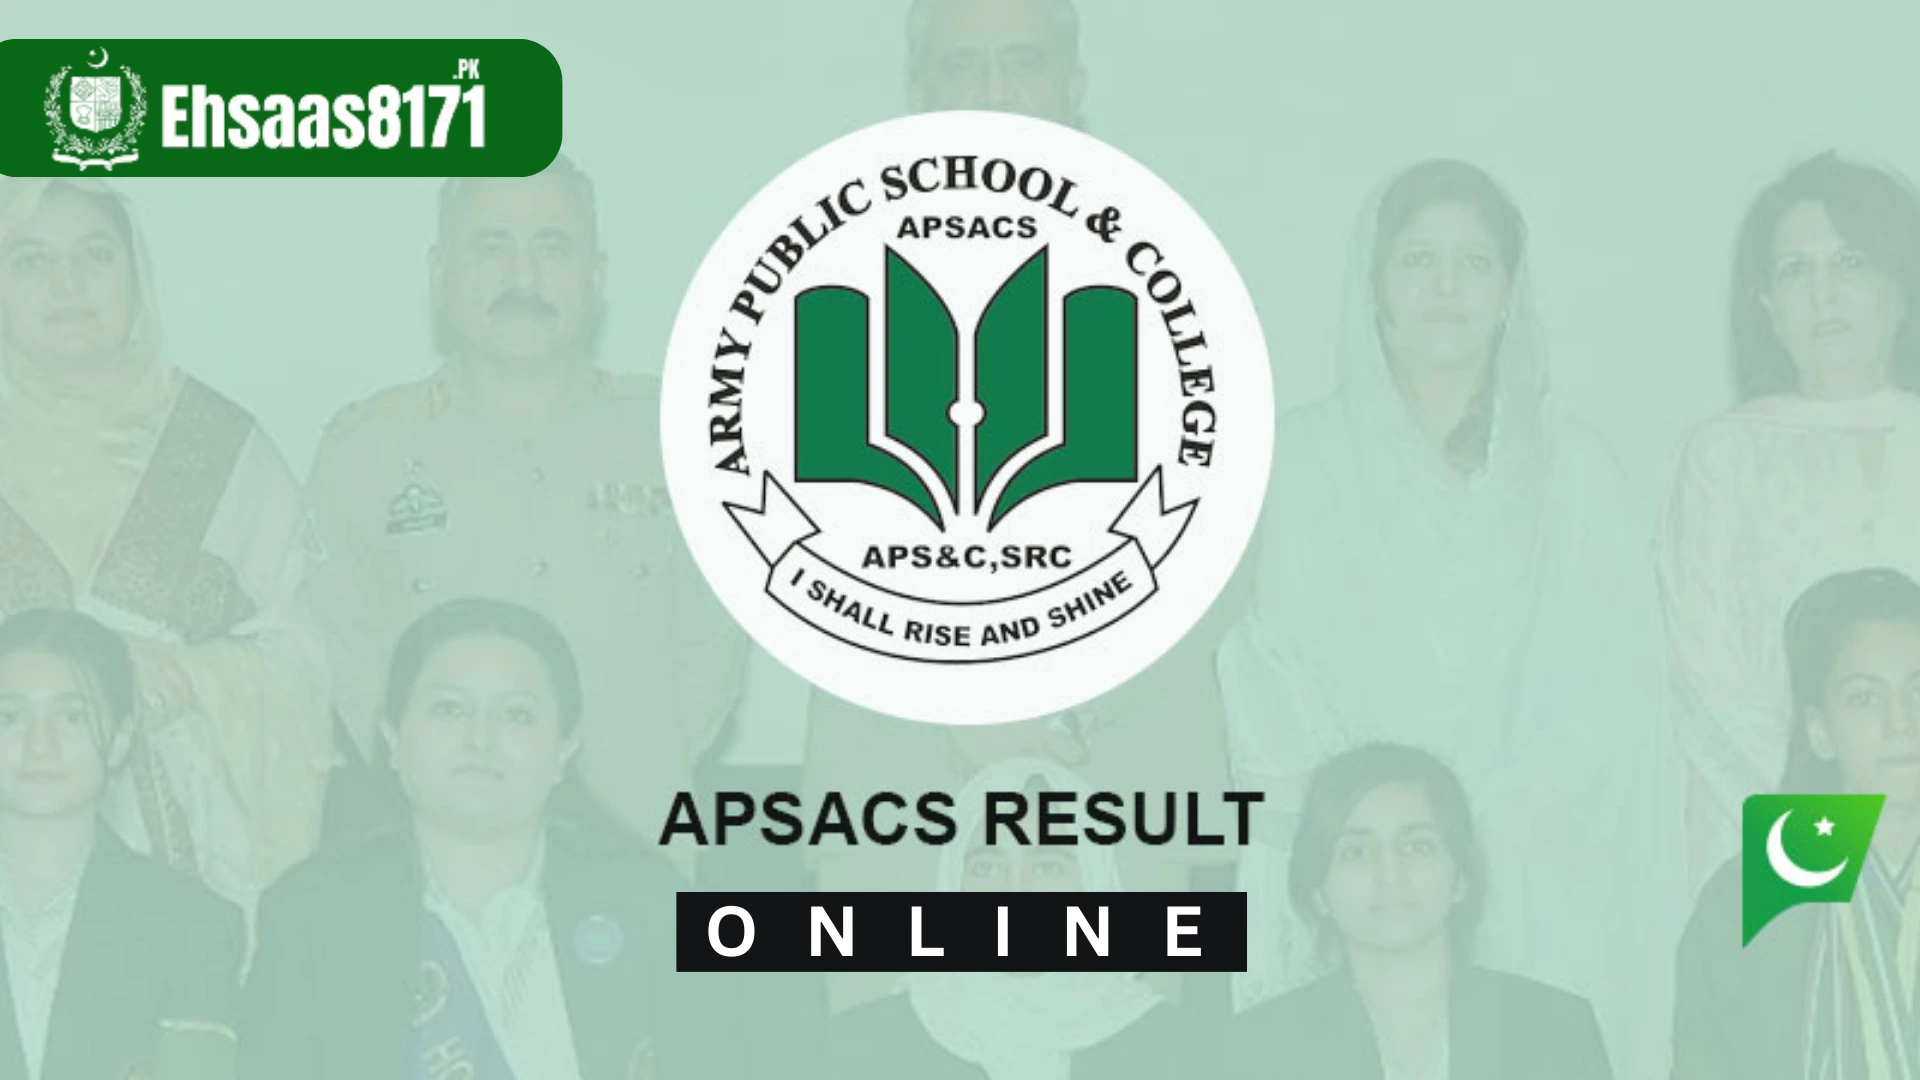 Online Result of APS